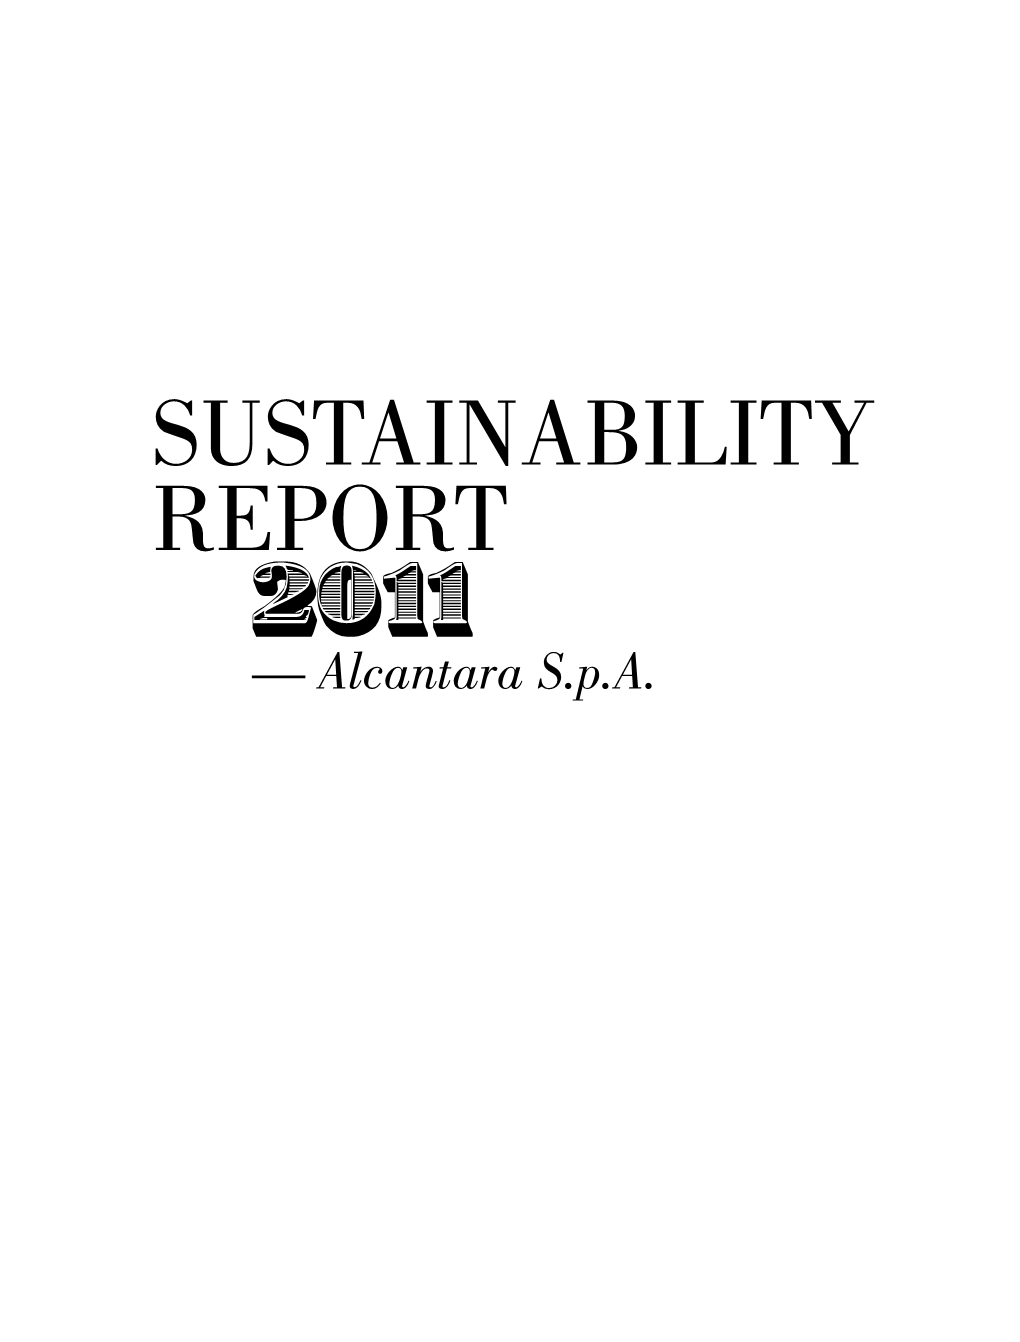 Sustainability Report 2011 — Alcantara S.P.A